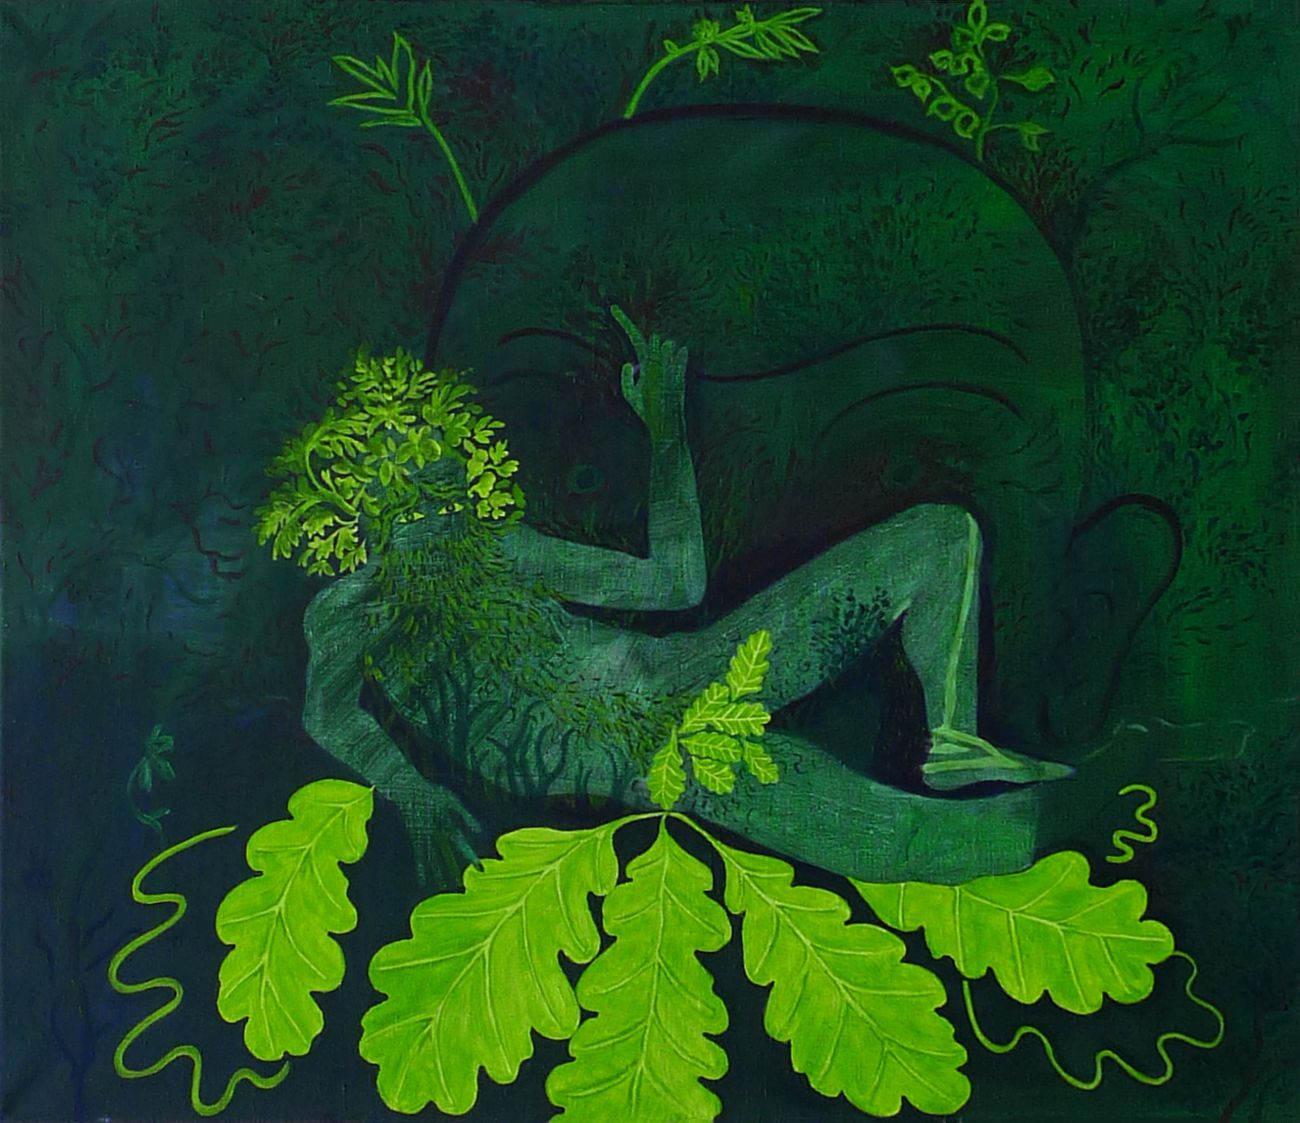 Jan Karpíšek: The Green Man, acryl on canvas, 95x110 cm, 2012